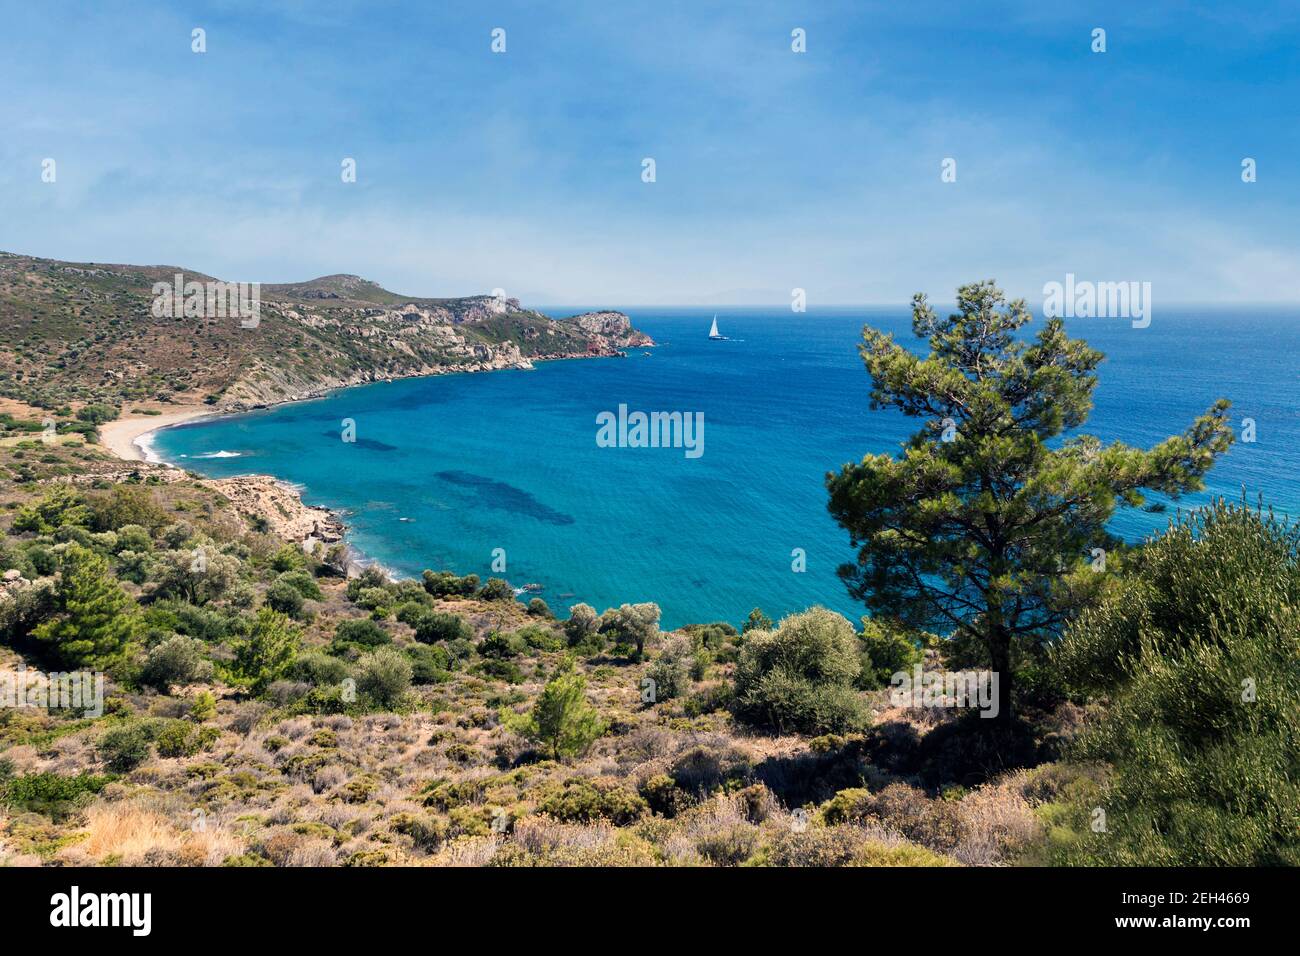 Scene on the Datca Peninsula, Mugla Province, Aegean region, Turkey.  Deserted beach with boat sailing by. Stock Photo